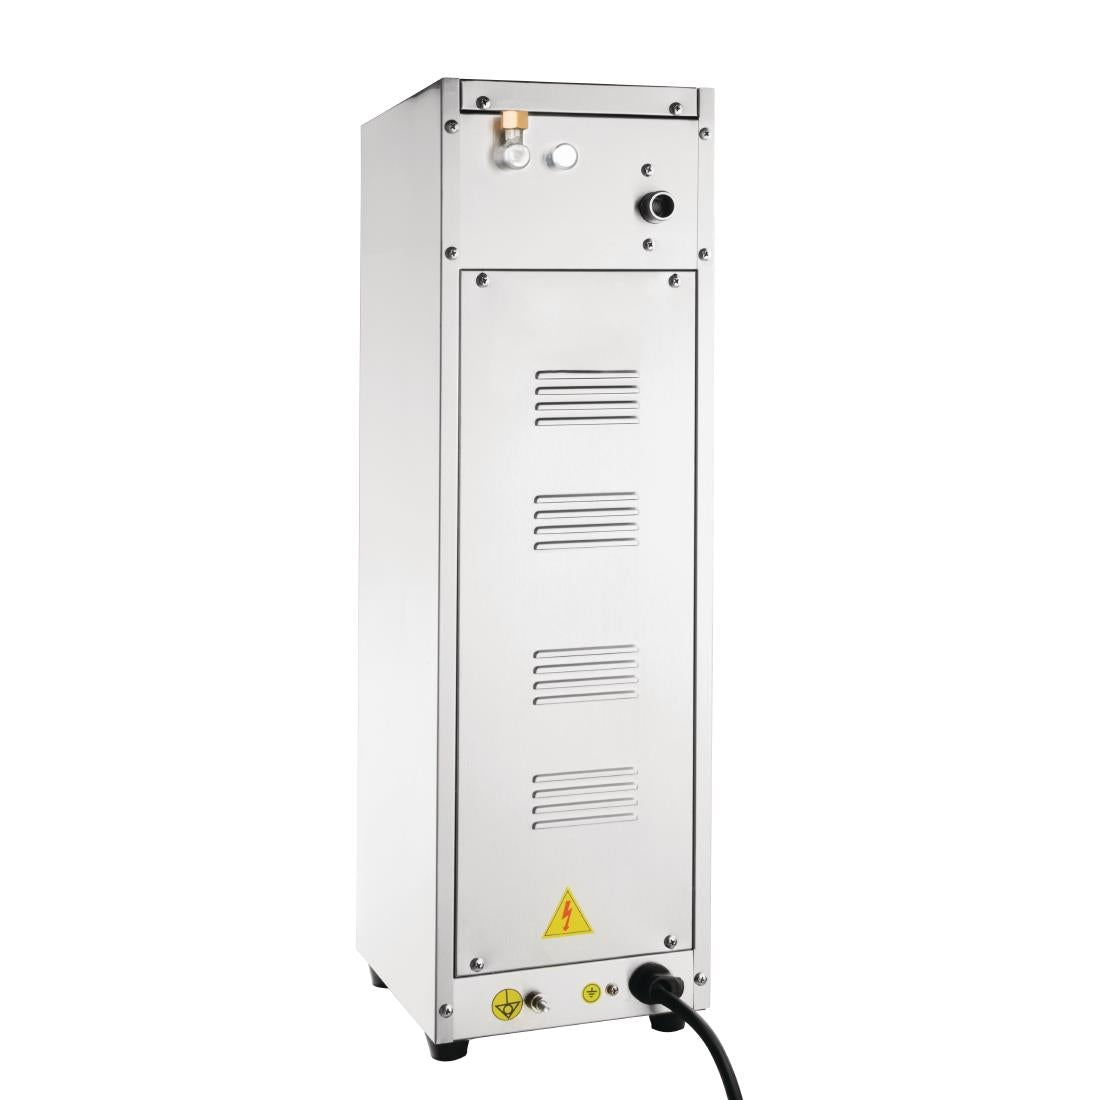 DF524 Nisbets Essentials Auto Fill Water Boiler 8Ltr JD Catering Equipment Solutions Ltd